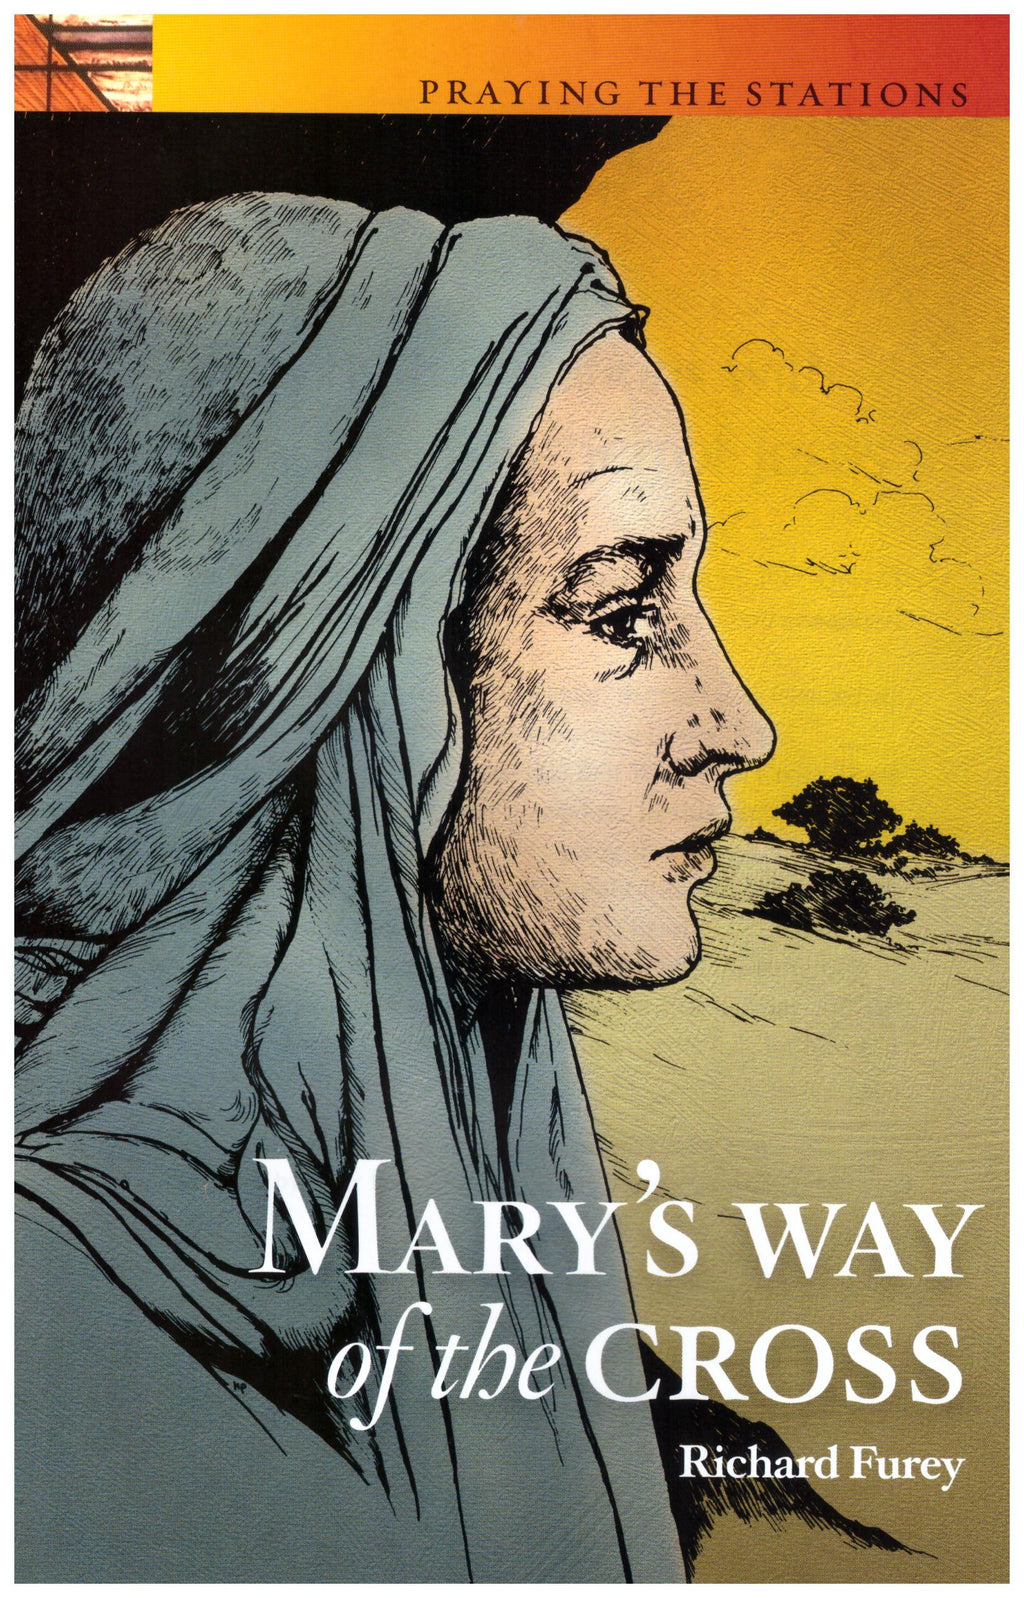 MARY'S WAY OF THE CROSS